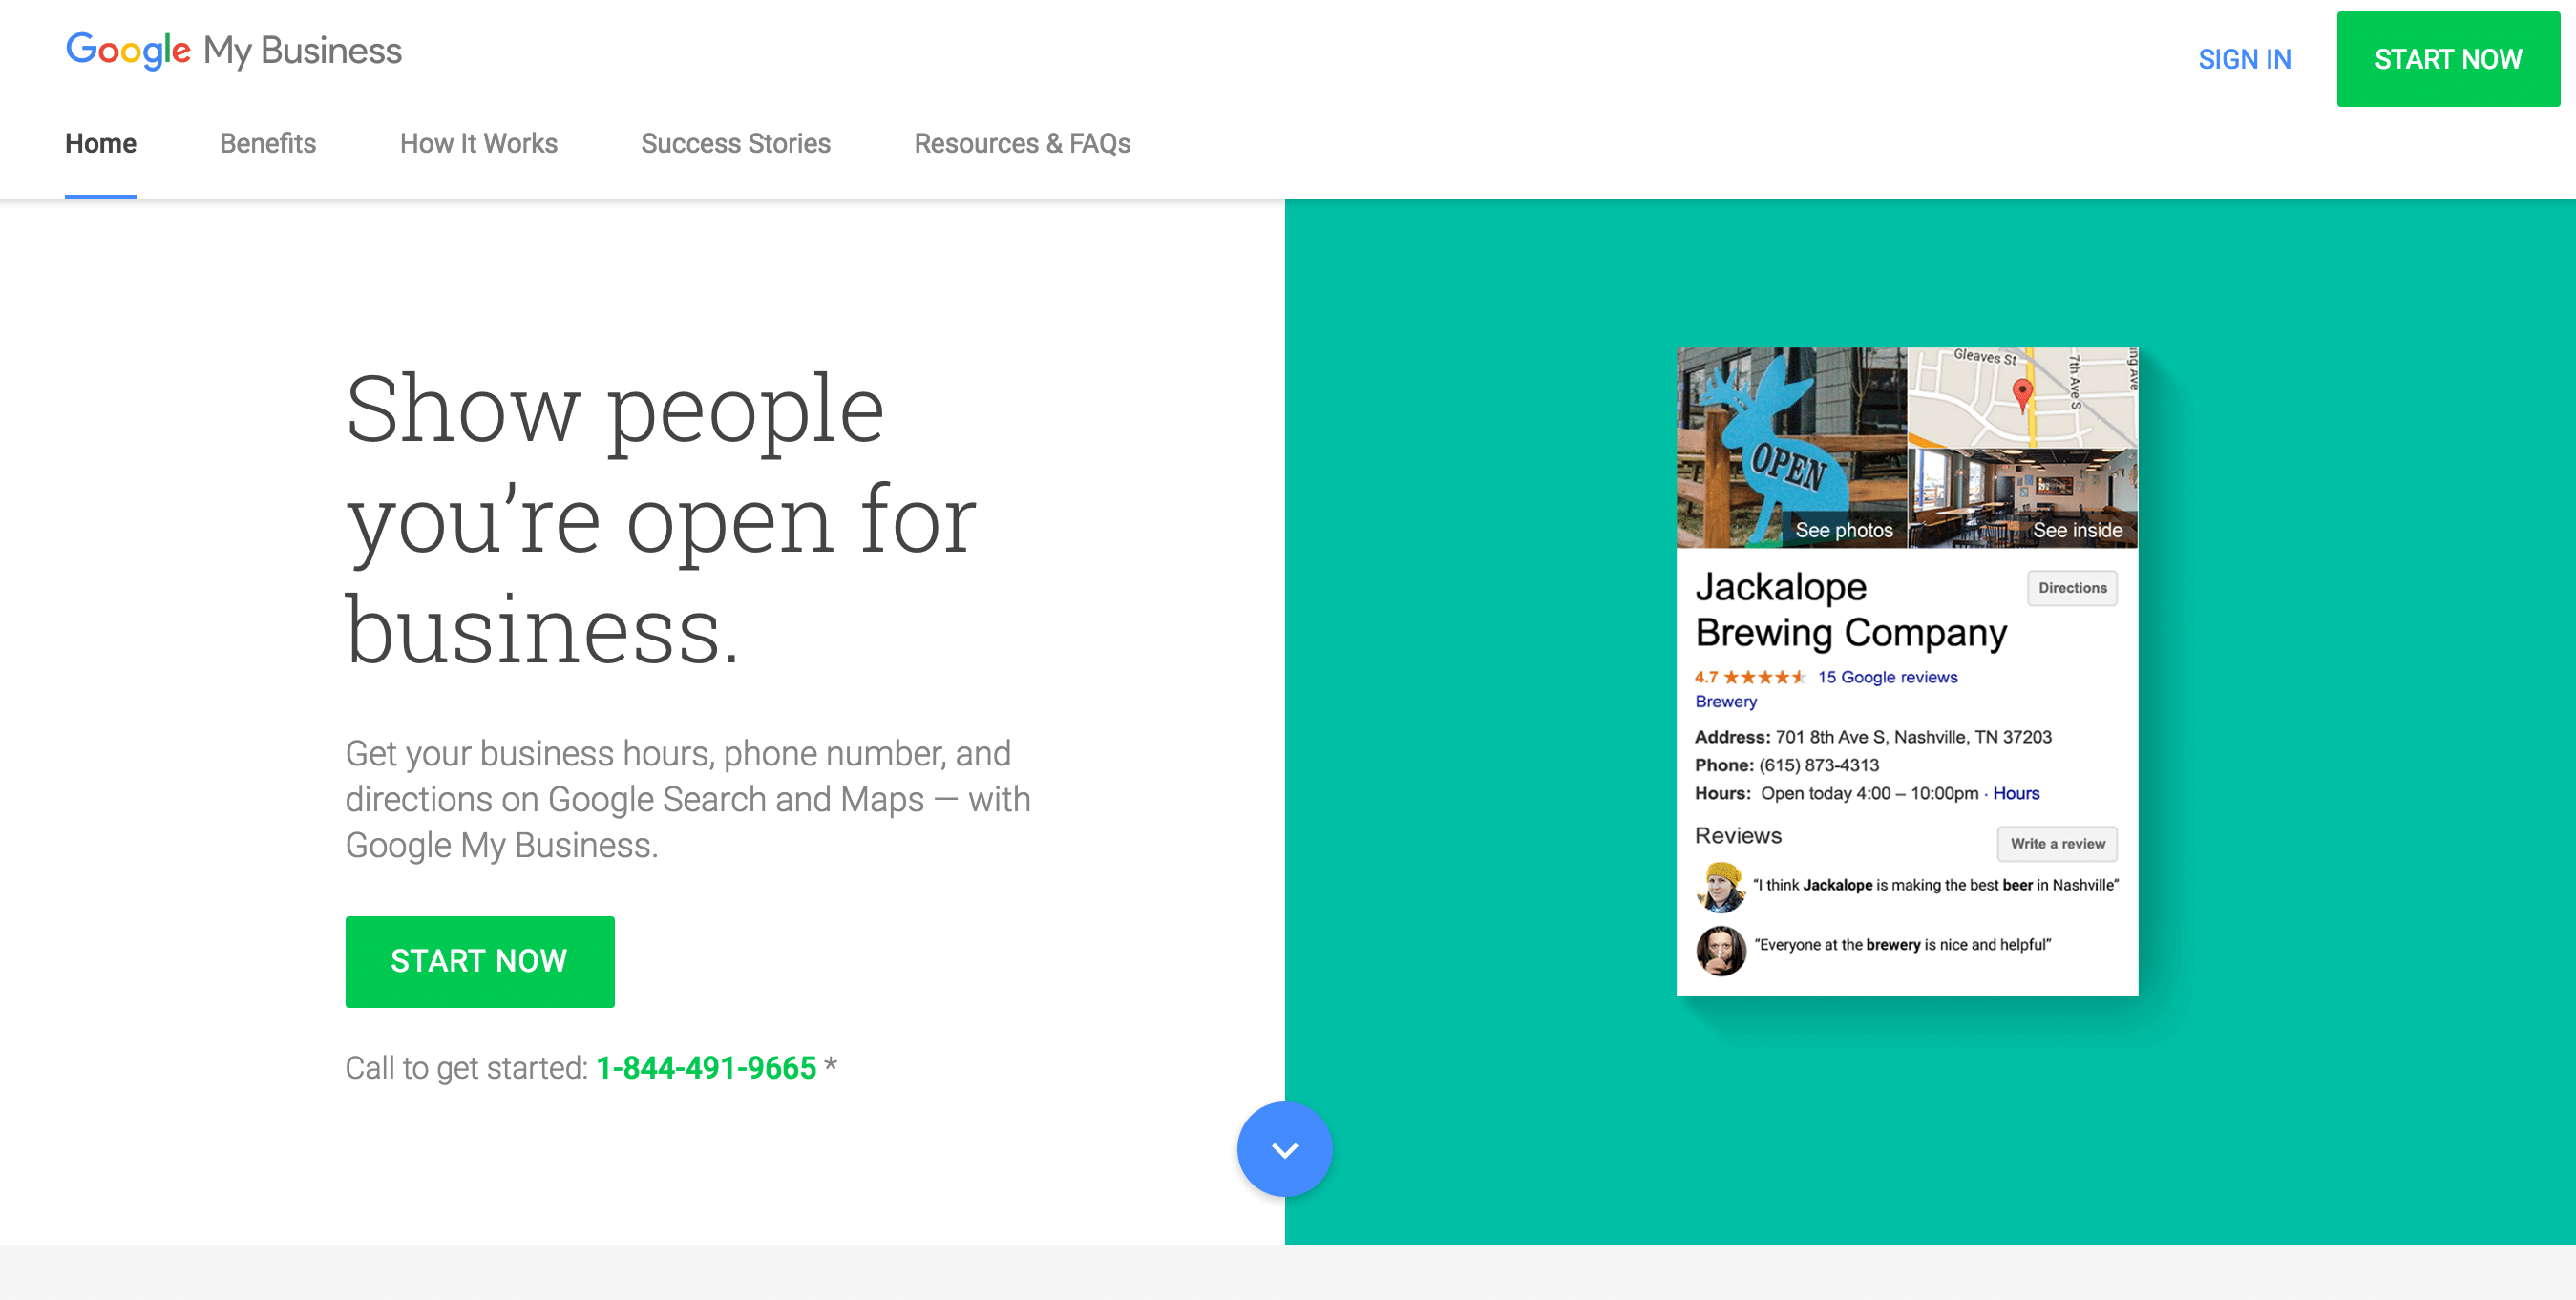 Google My Business Homepage